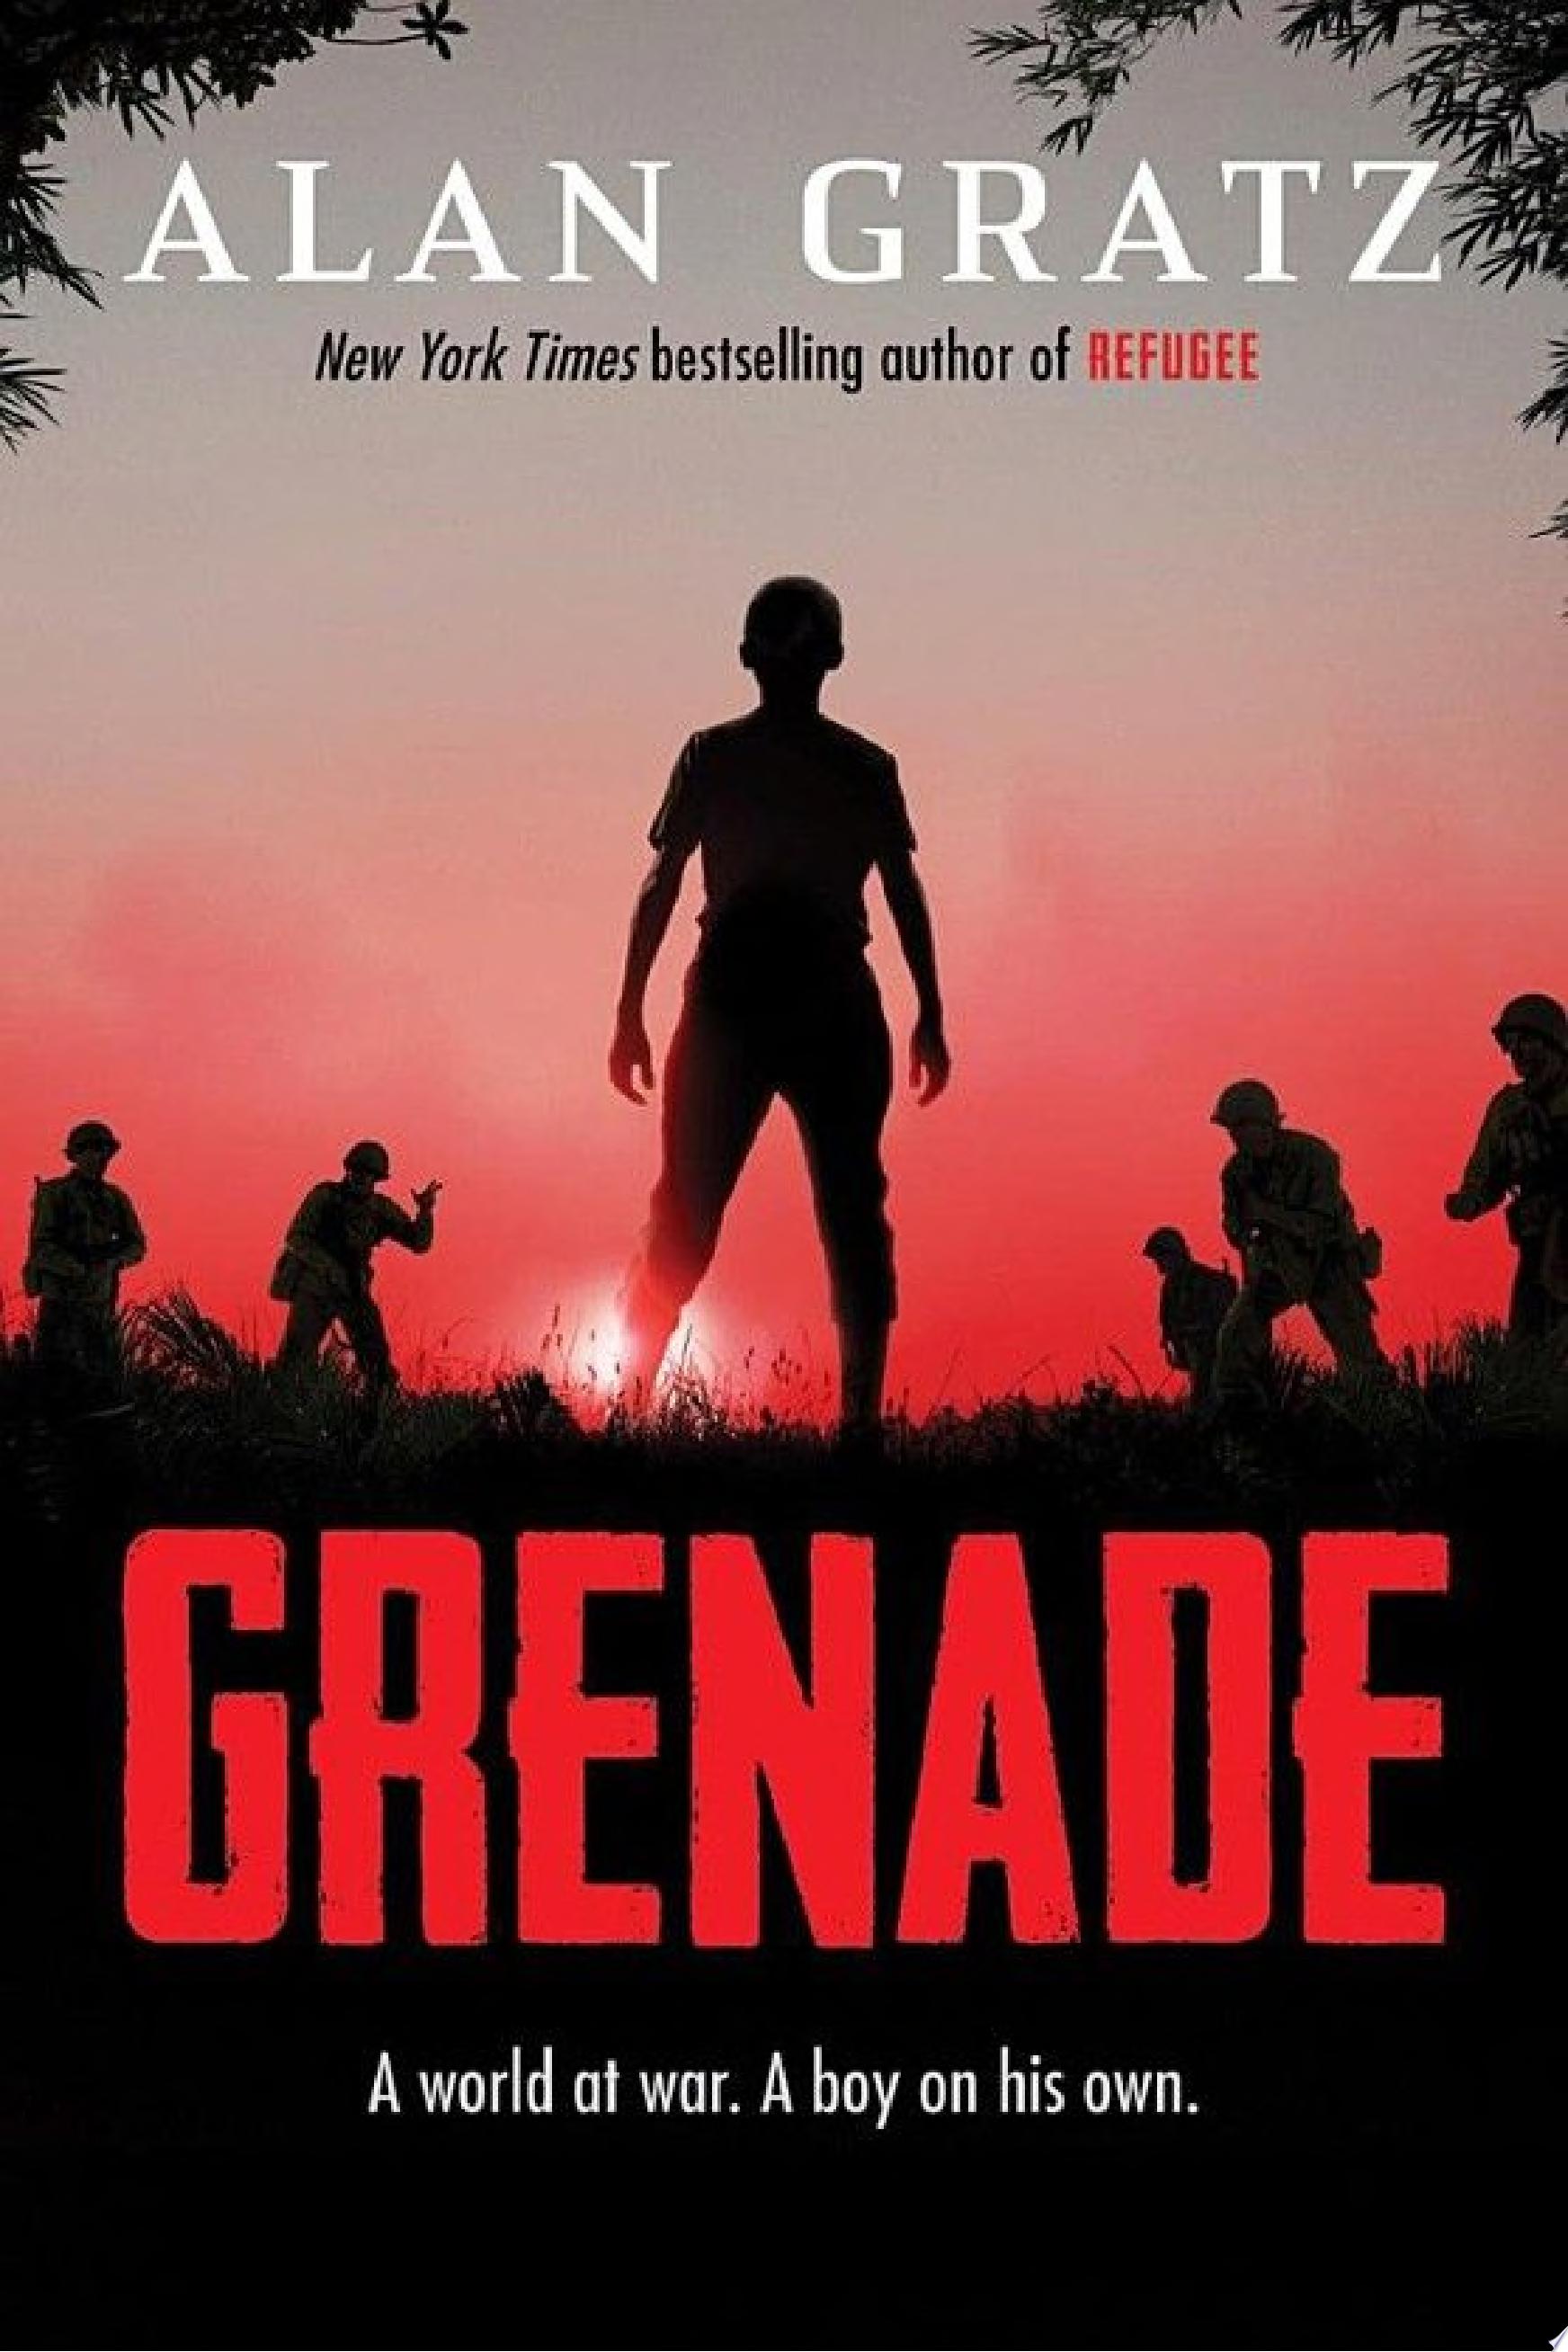 Image for "Grenade"